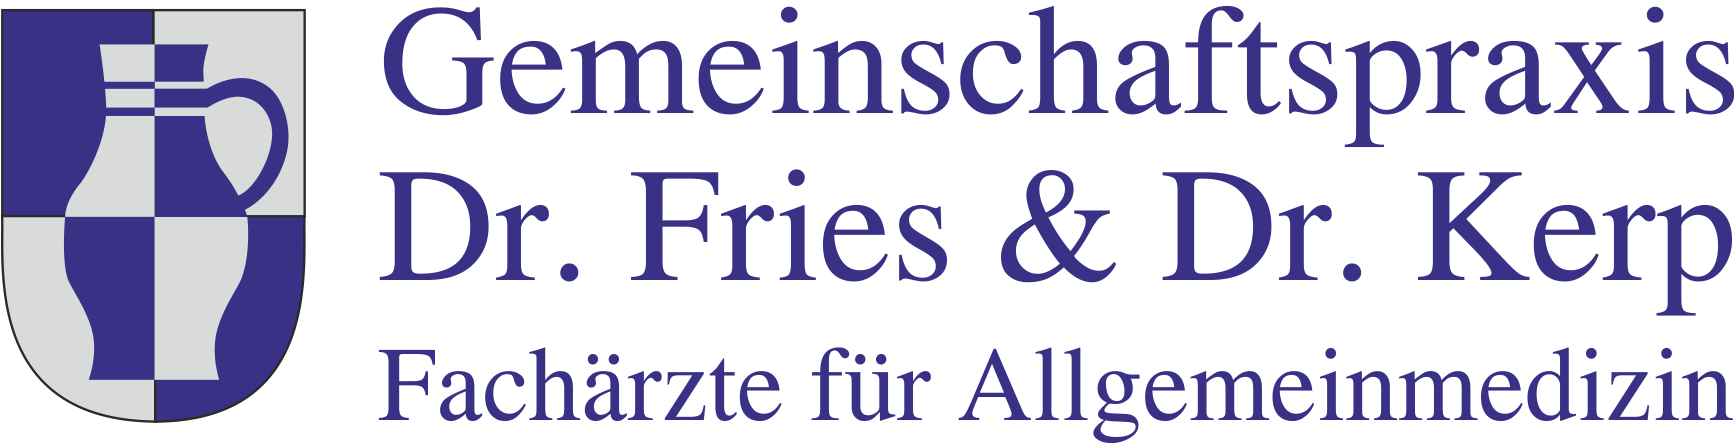 Gemeinschaftspraxis Dr. Fries & Dr. Kerp in Höhr-Grenzhausen